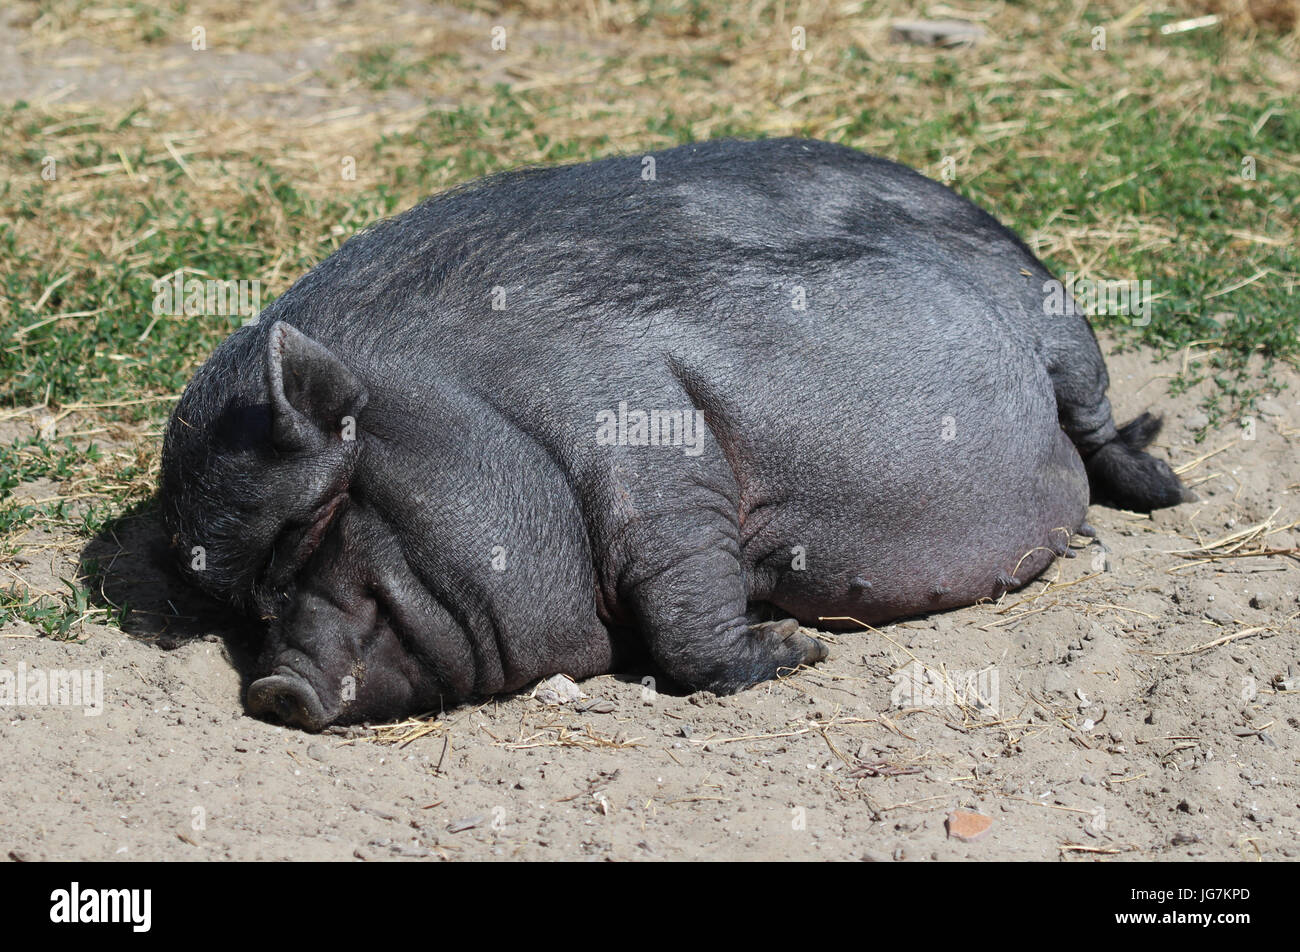 Pot-bellied pig (Sus scrofa domesticus) Stock Photo